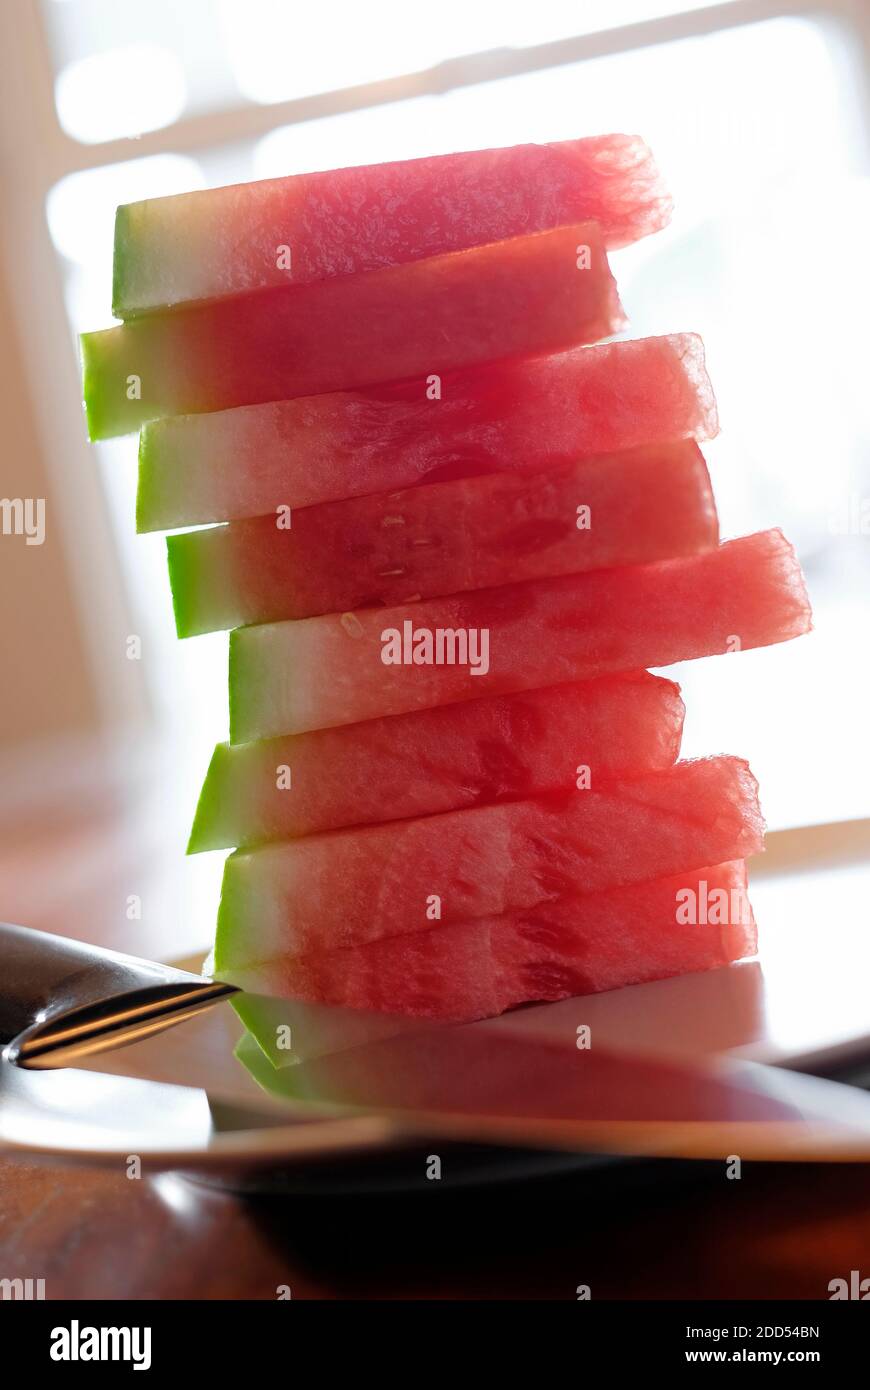 watermelon sliced segments on plate in home interior Stock Photo